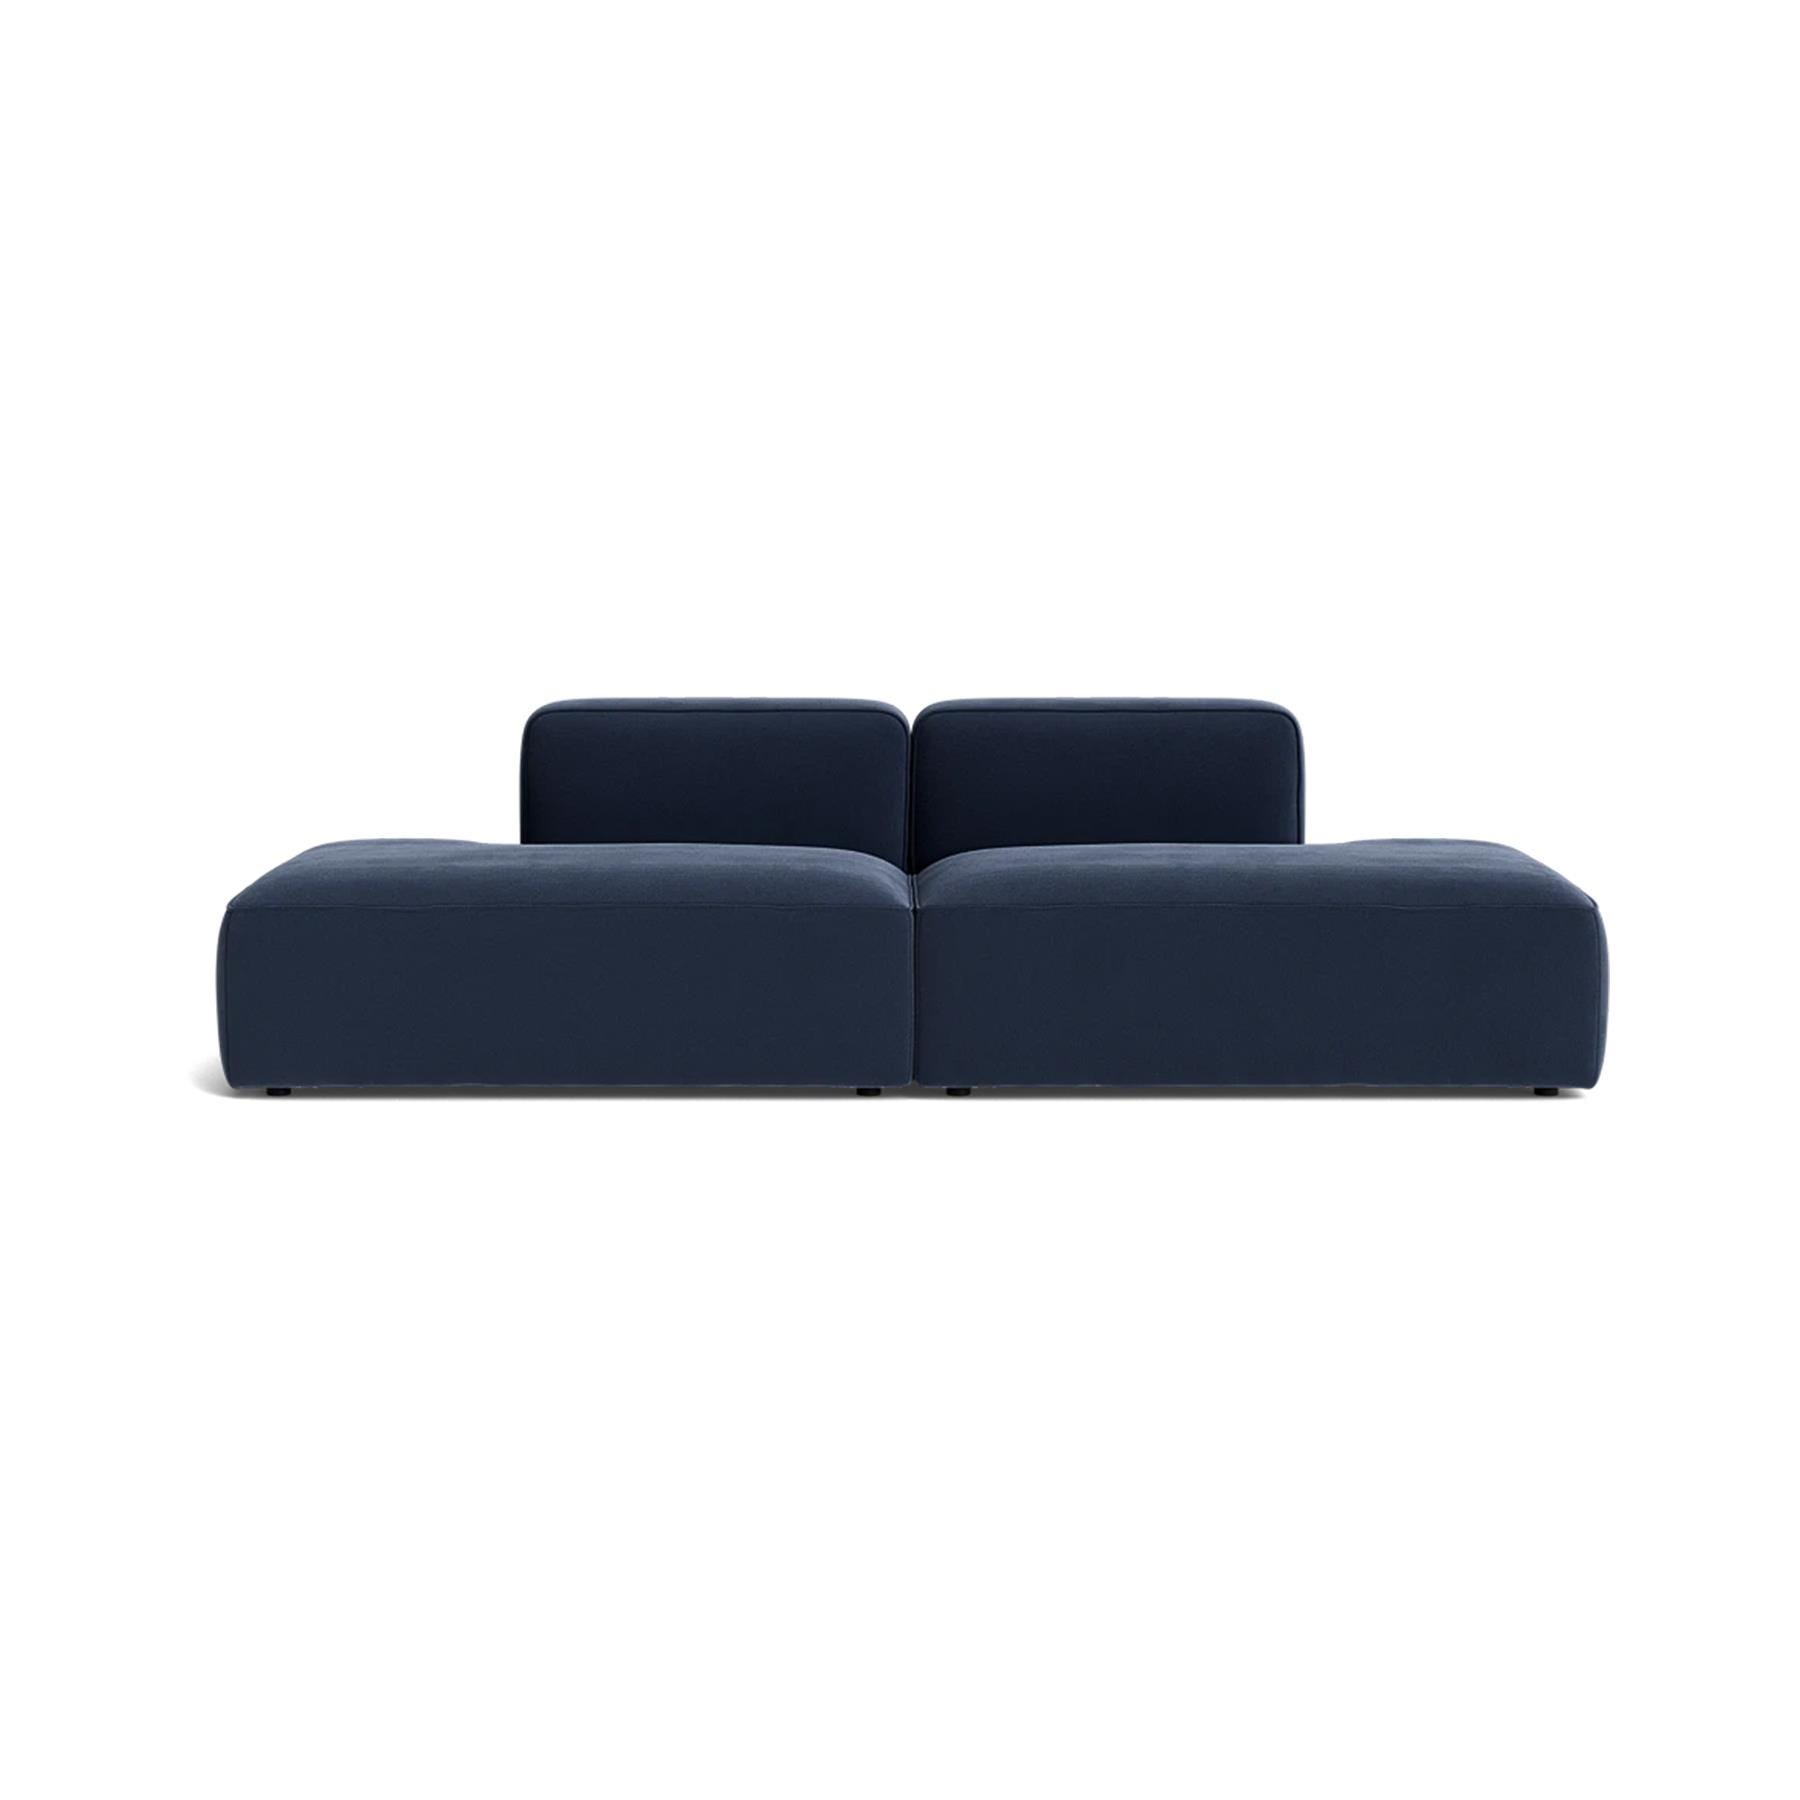 Make Nordic Basecamp Sofa With 2 Open Ends Nordic Velvet 220 Blue Designer Furniture From Holloways Of Ludlow